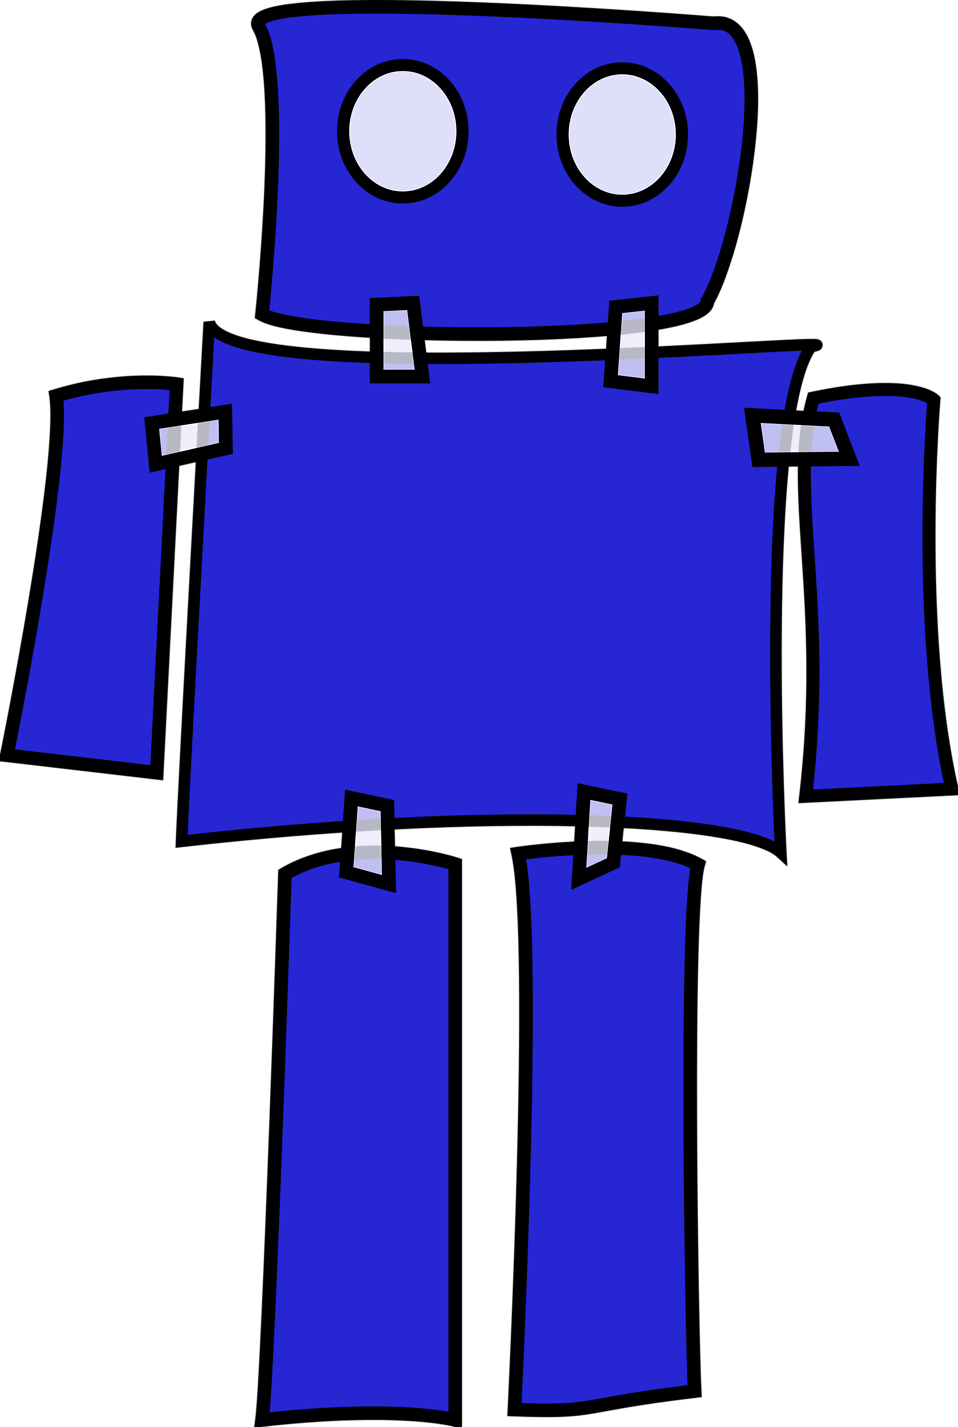 Robot Free Stock Photo Illustration Of A Cartoon Robot 16860